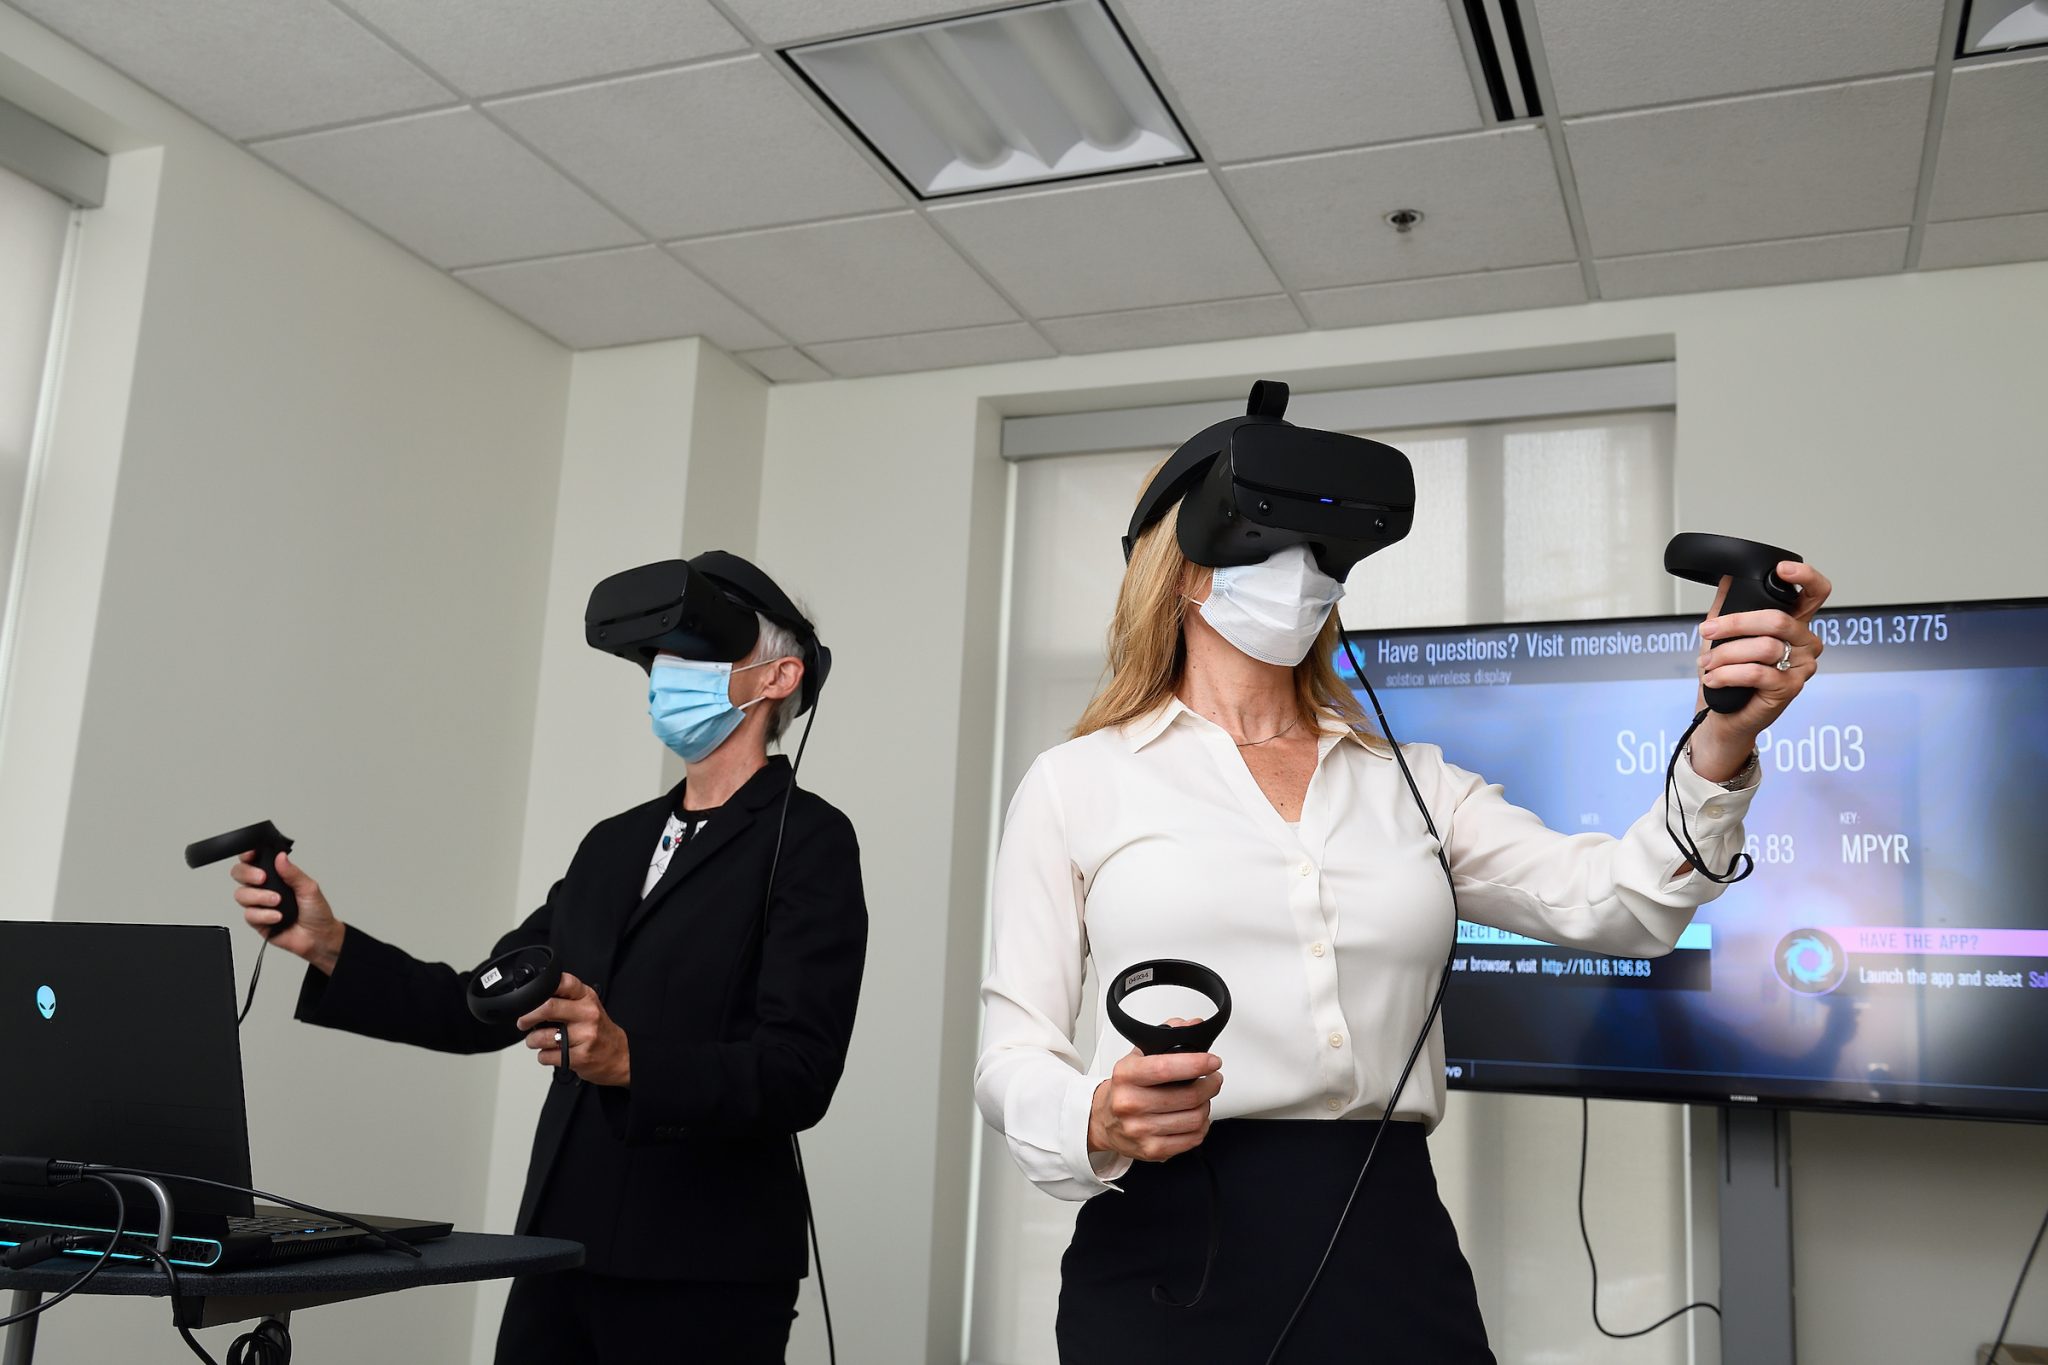 Amidst COVID19 Virtual Reality Makes Social Distancing Simulatio